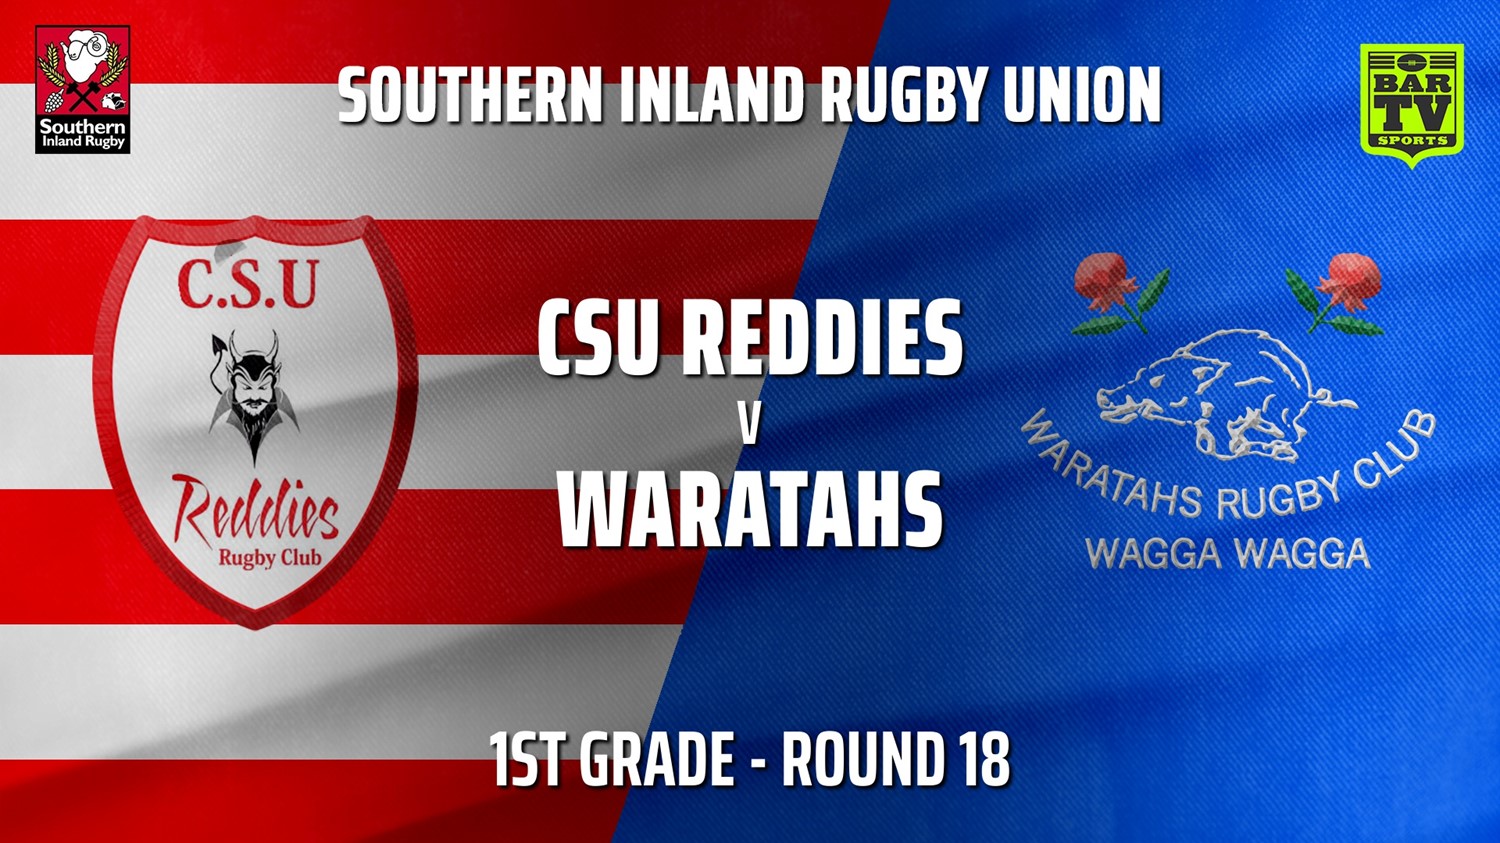 210814-Southern Inland Rugby Union Round 18 - 1st Grade - CSU Reddies v Wagga Waratahs Slate Image